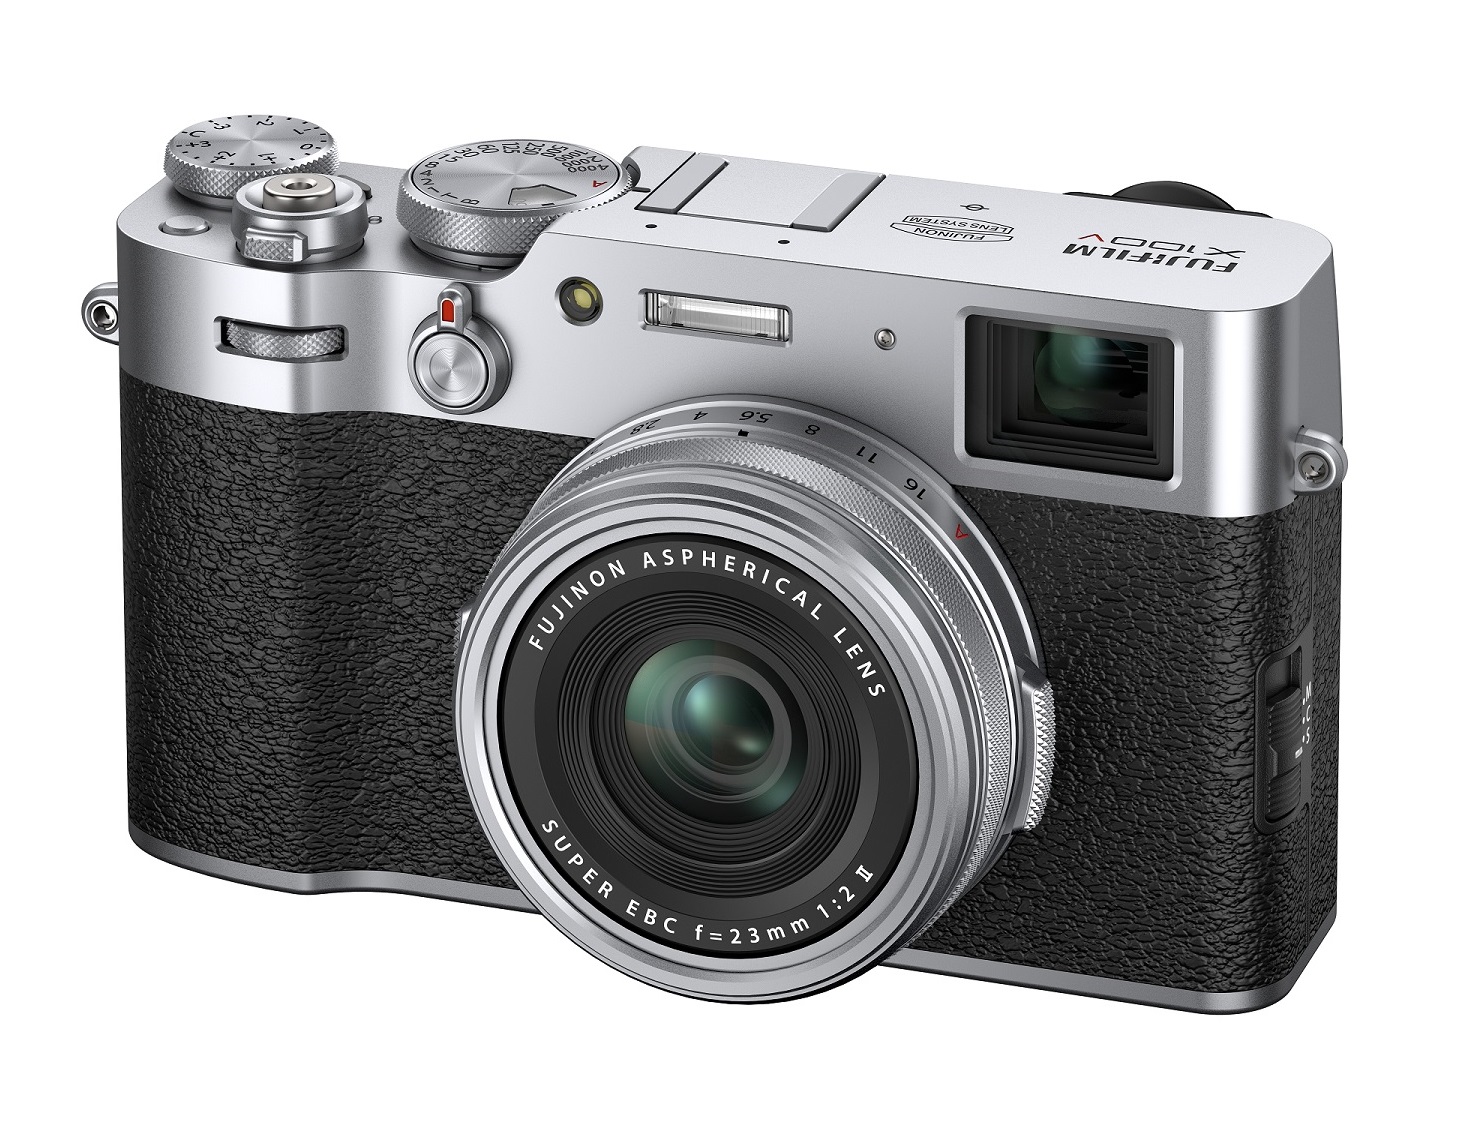 Nyt kompaktkamera fra Fujifilm er den perfekte rejsemakker | Digitalfoto.dk